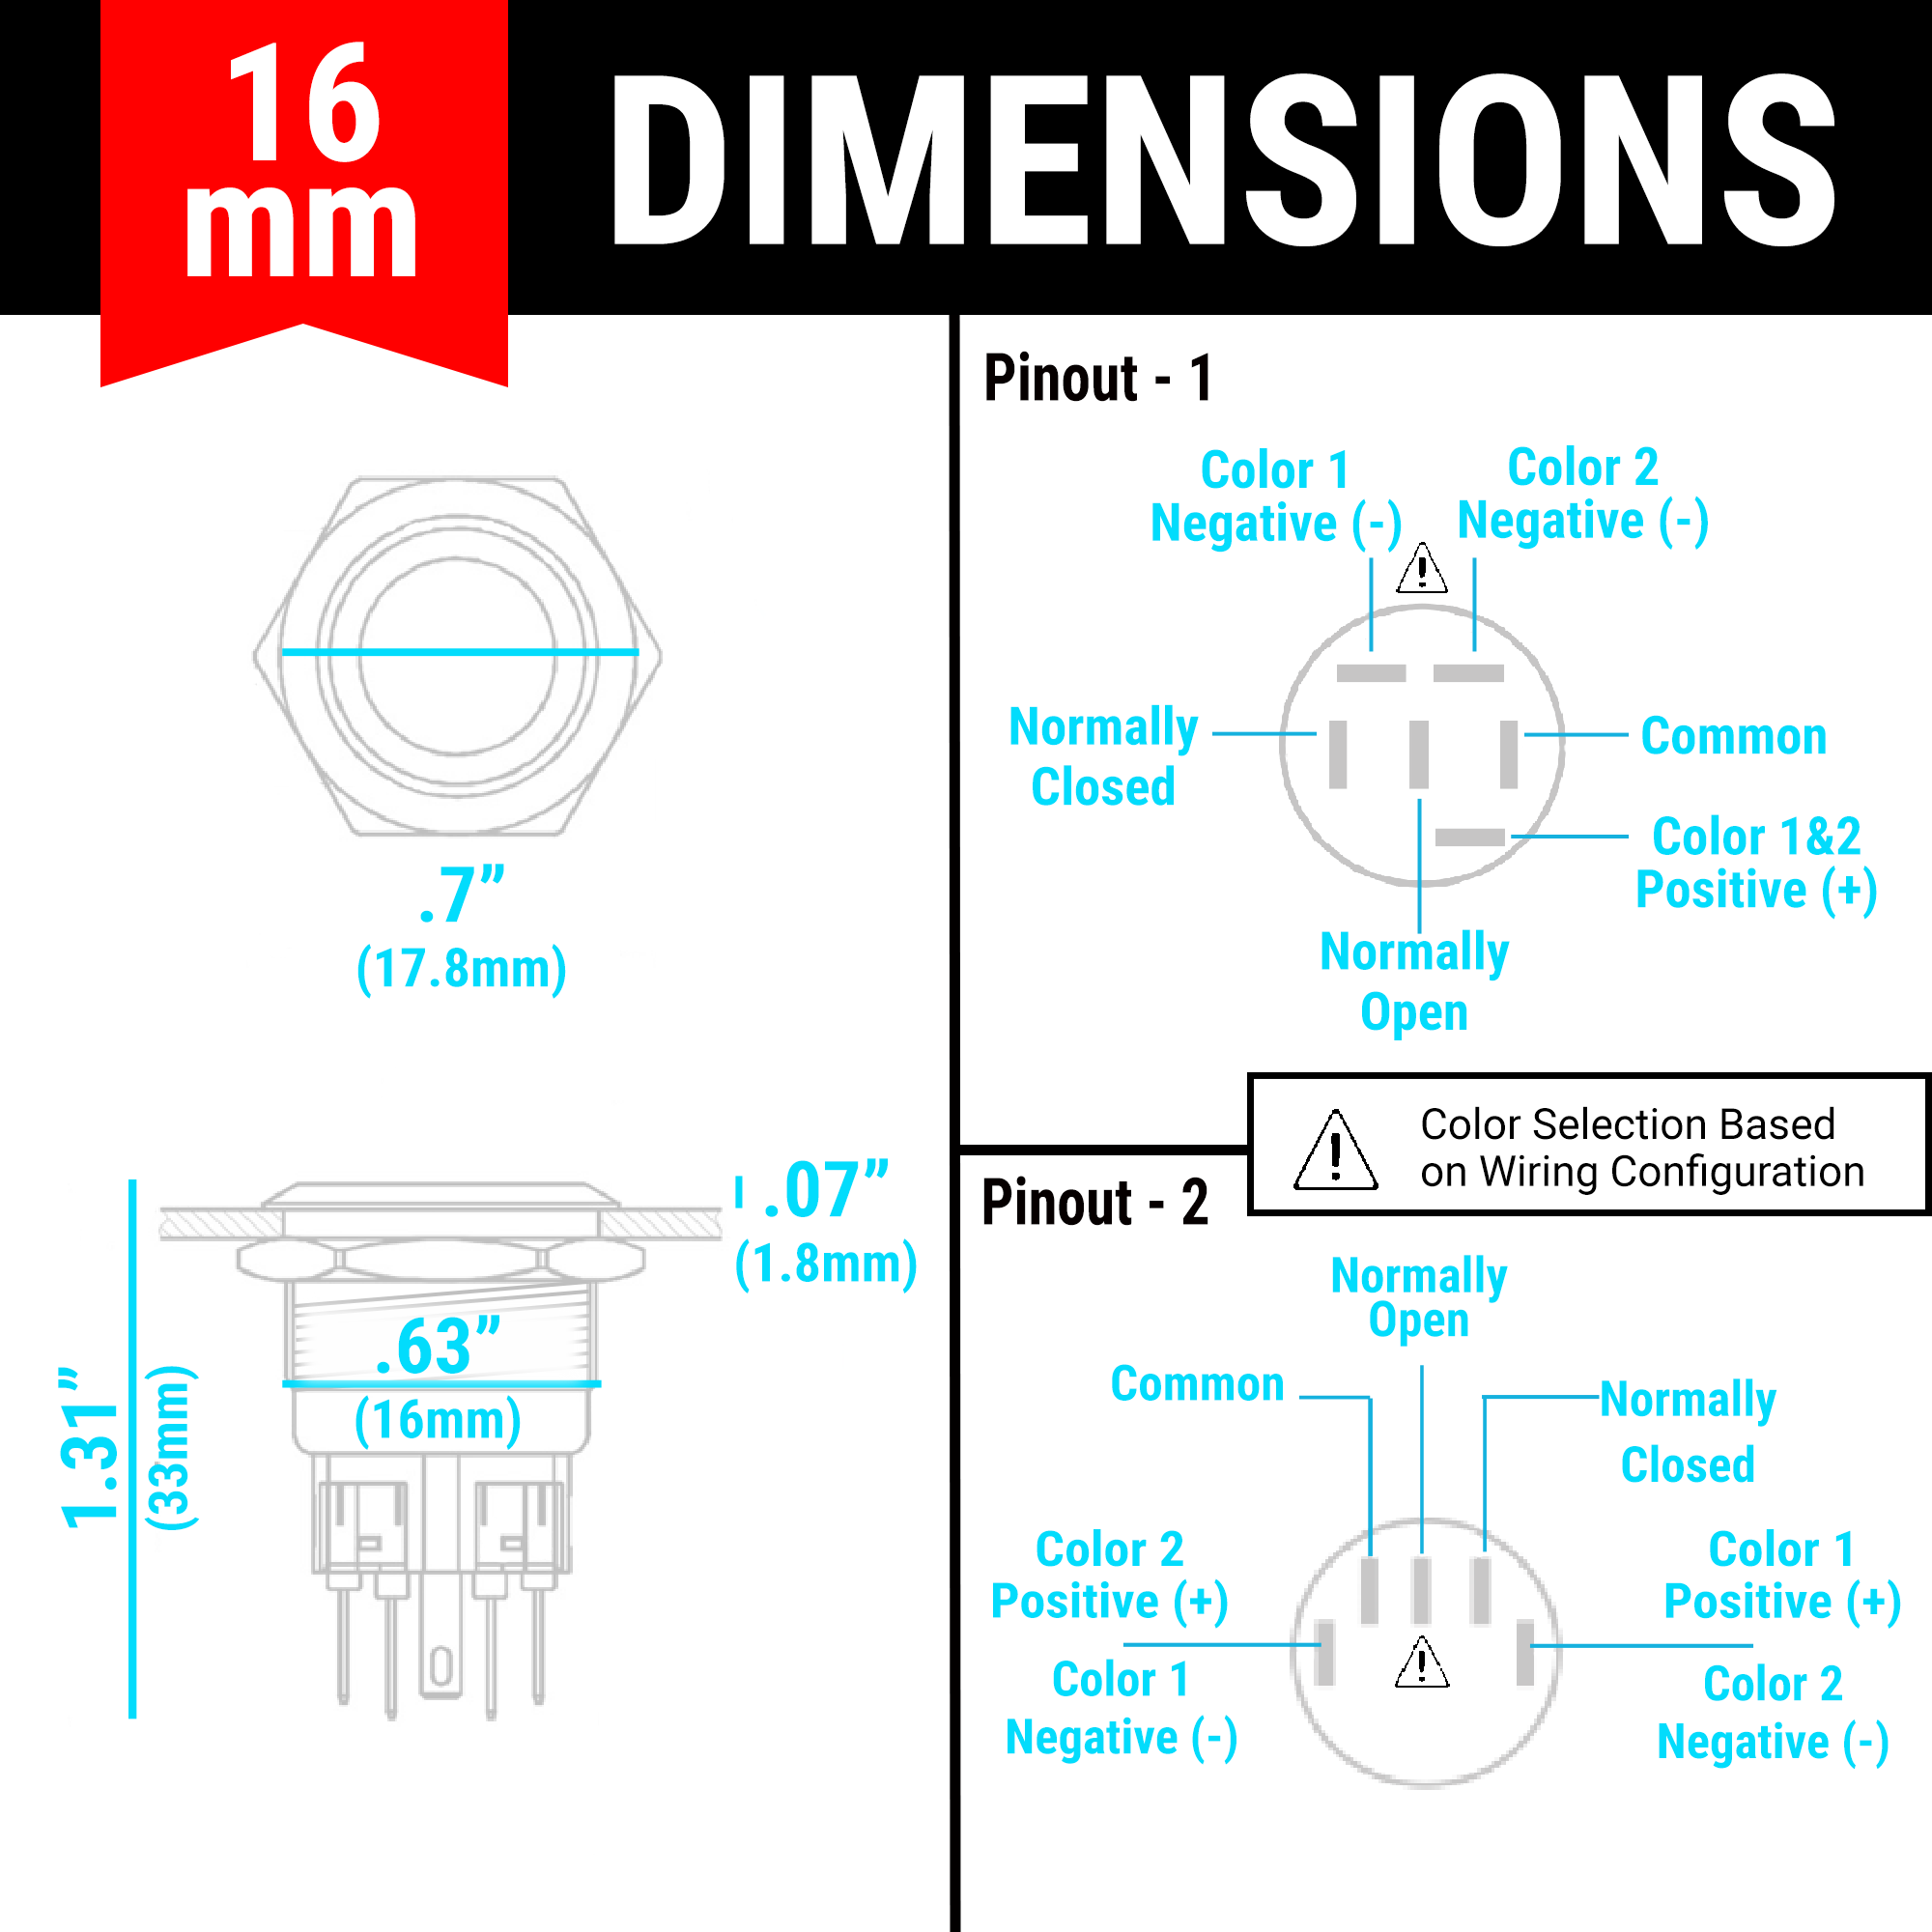 16mm Dimensions